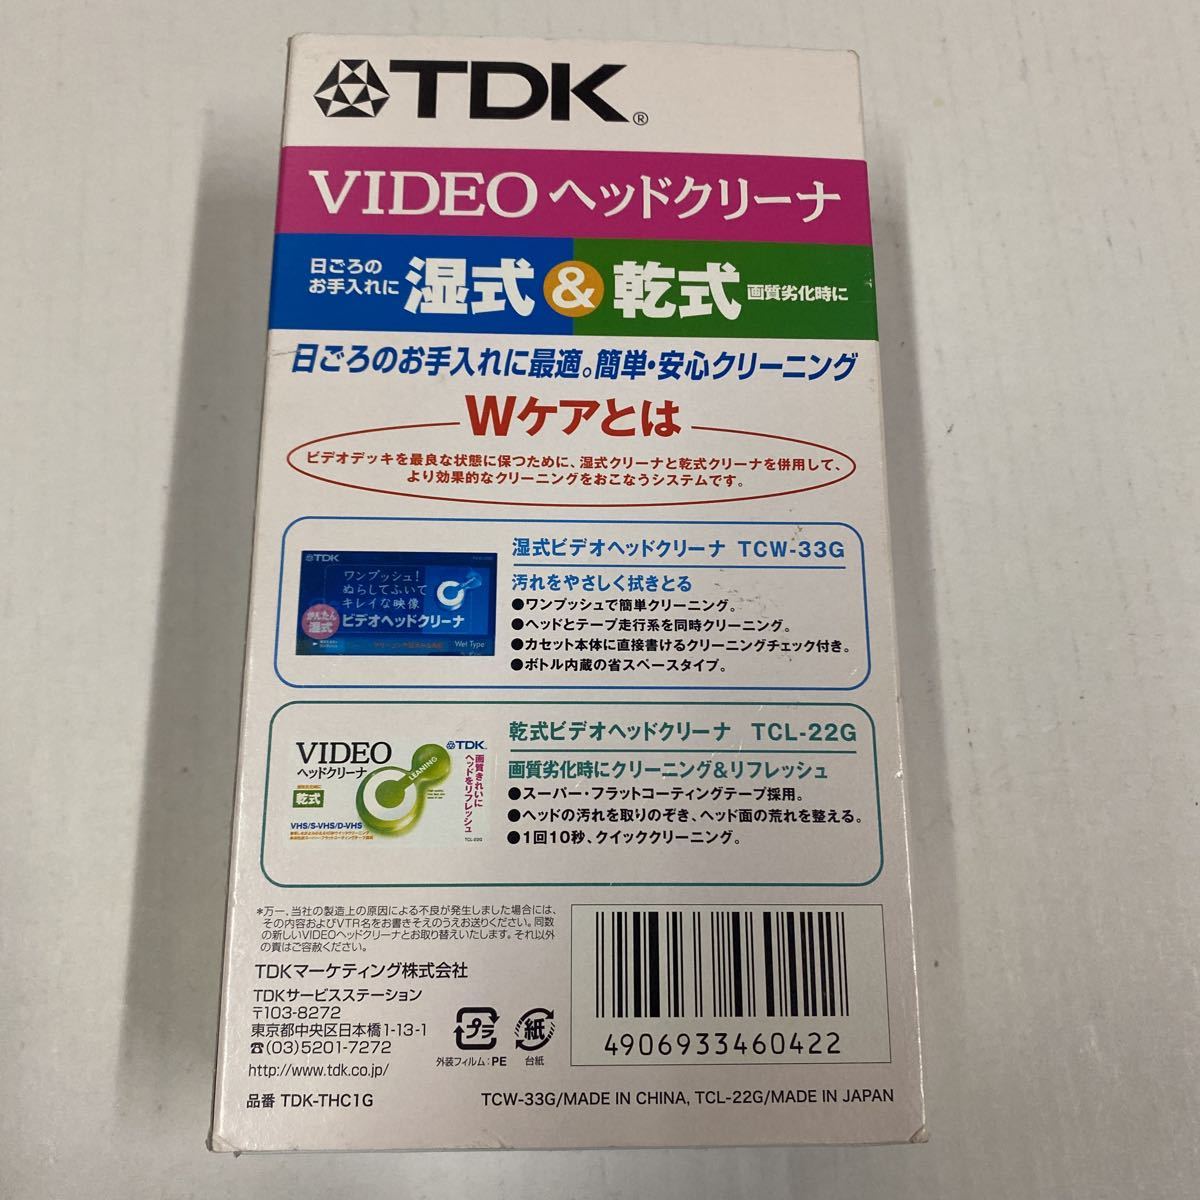 TDK VIDEO ヘッドクリーナー 湿式&乾式 S-VHS VHS D-VHS ビデオヘッドクリーナー 年代物_画像2